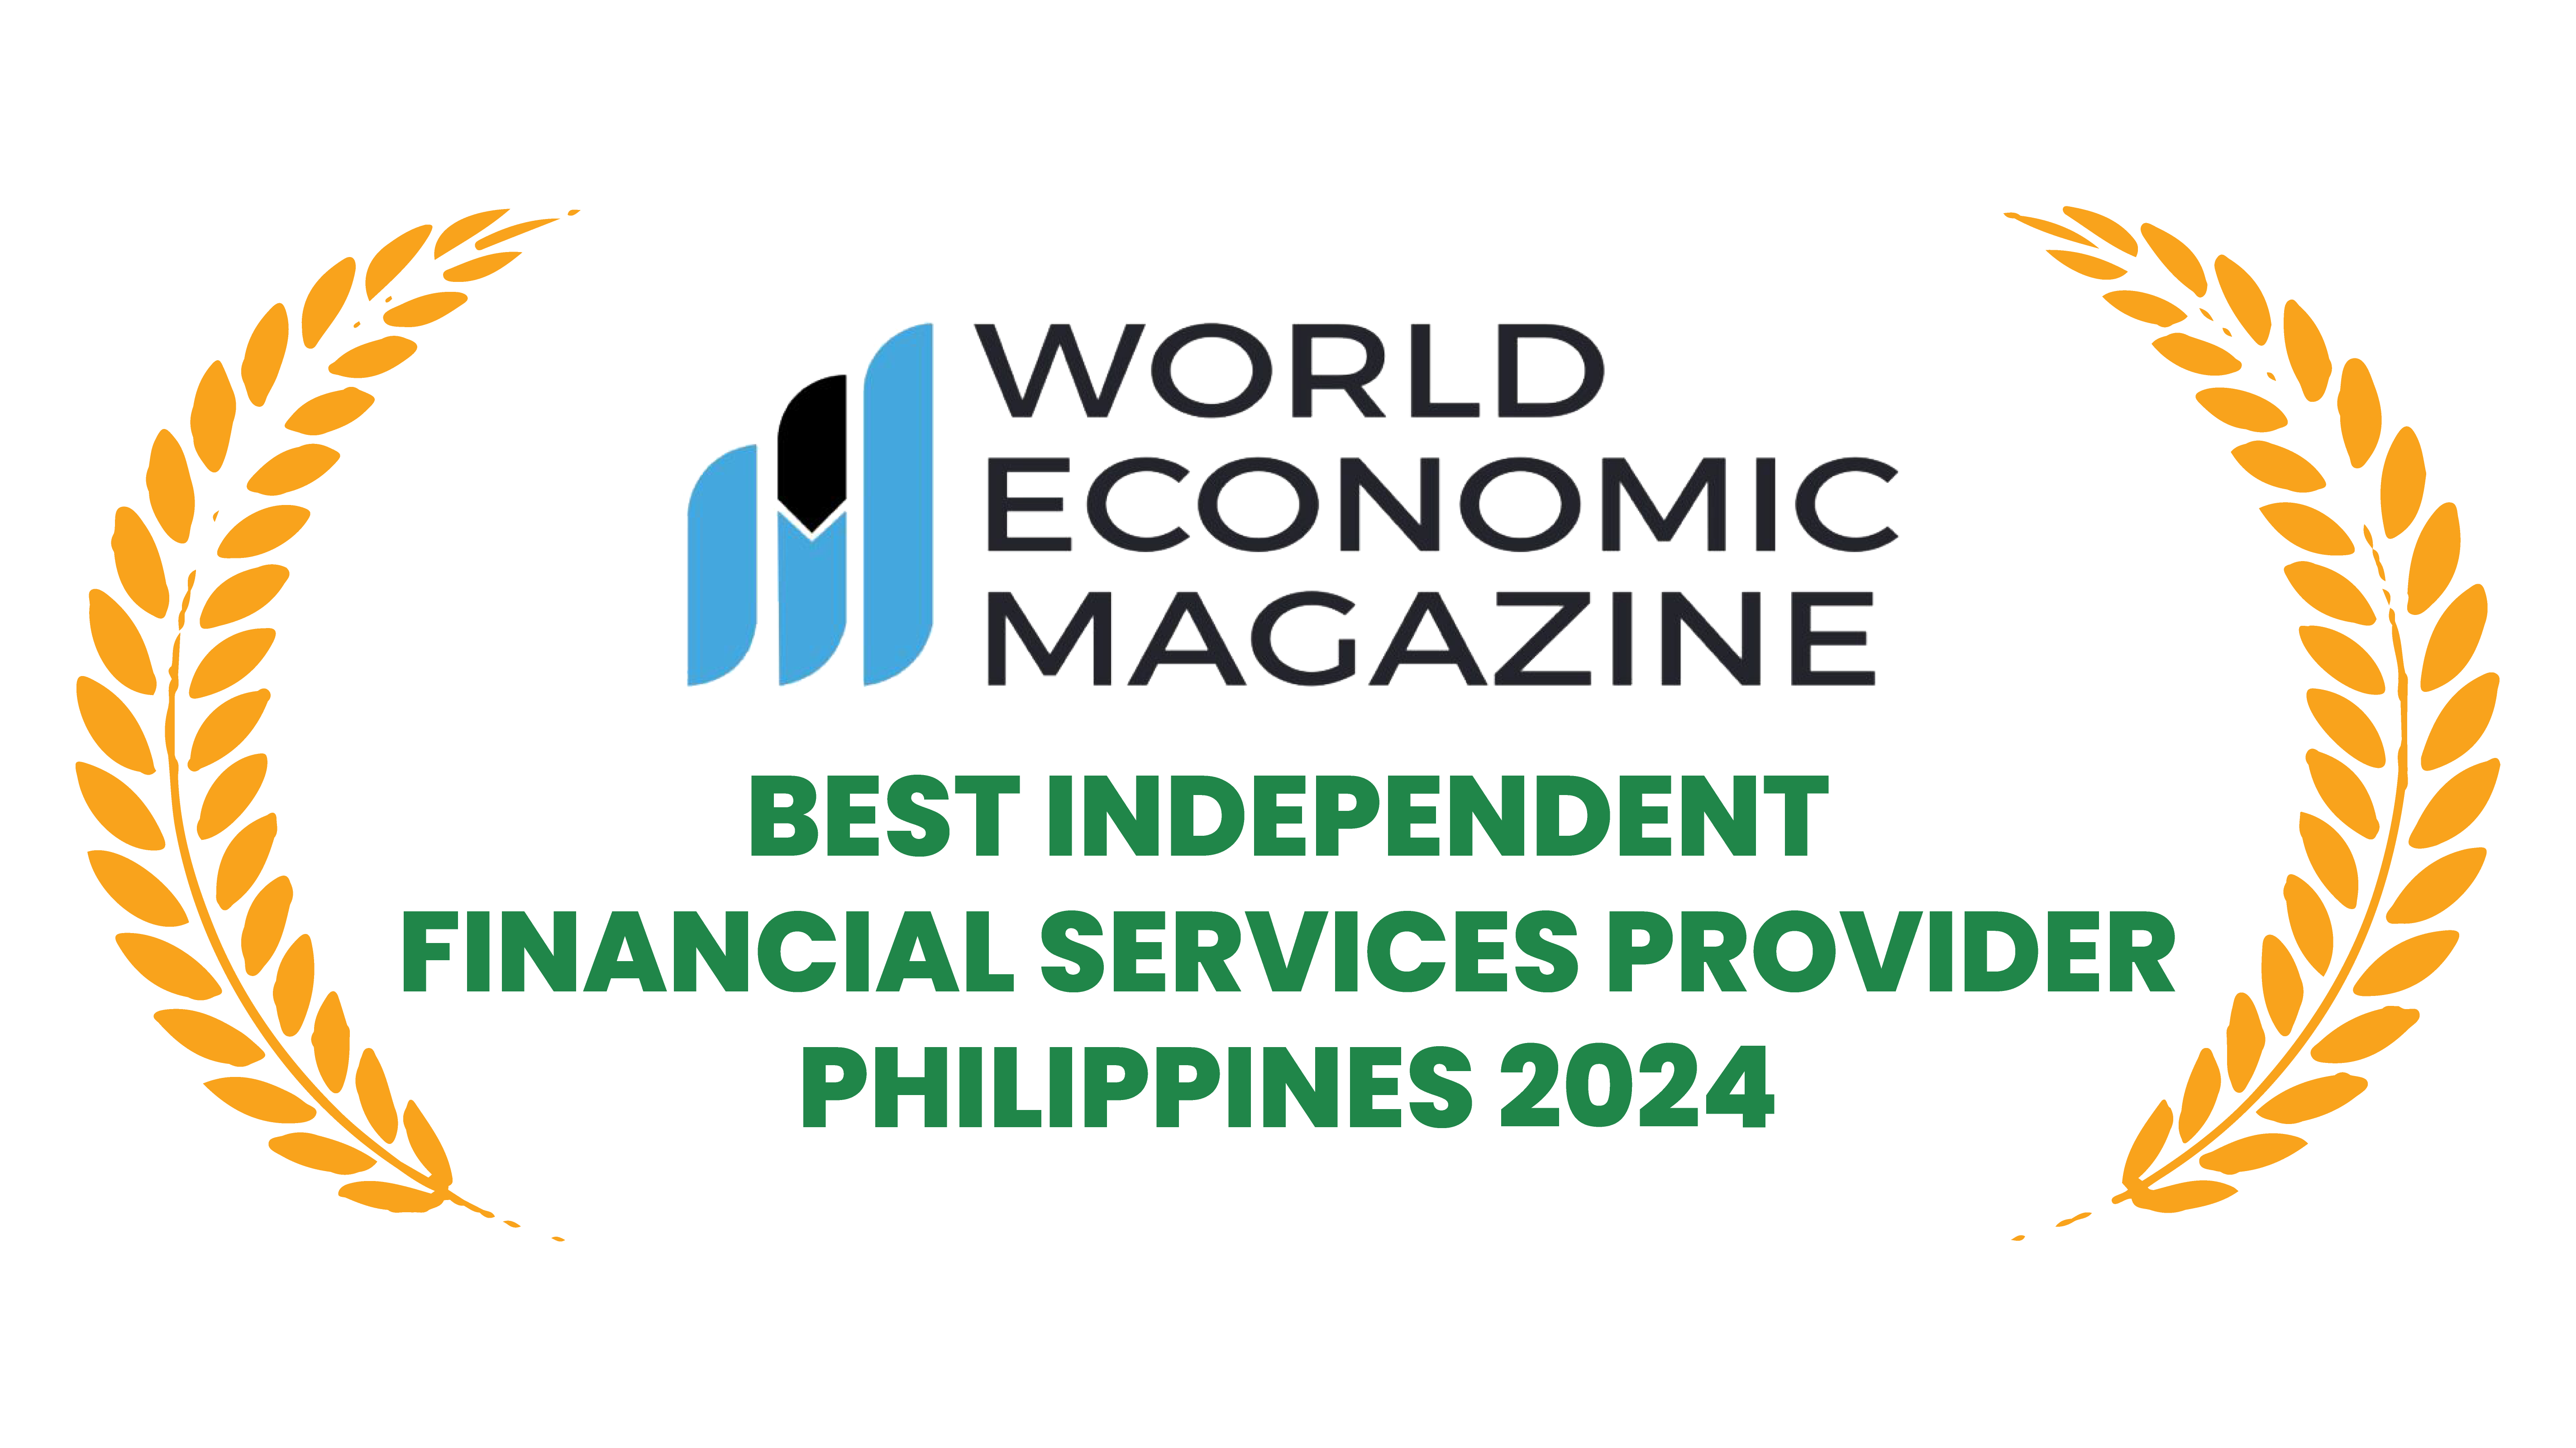 world economic magazine - best independent financial services provider philippines 2024